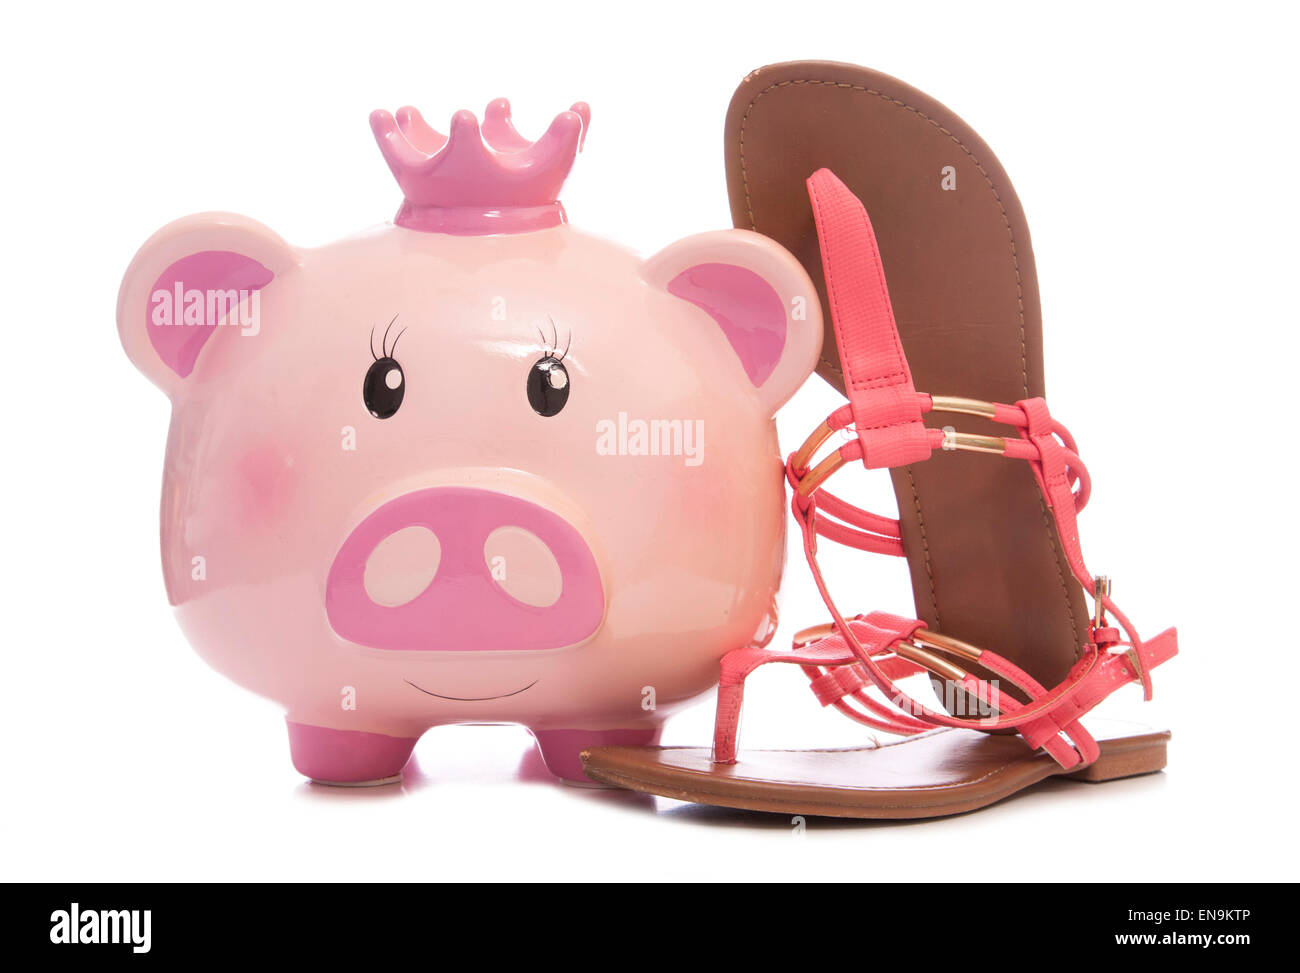 saving money for holiday clothes piggy bank cutout Stock Photo